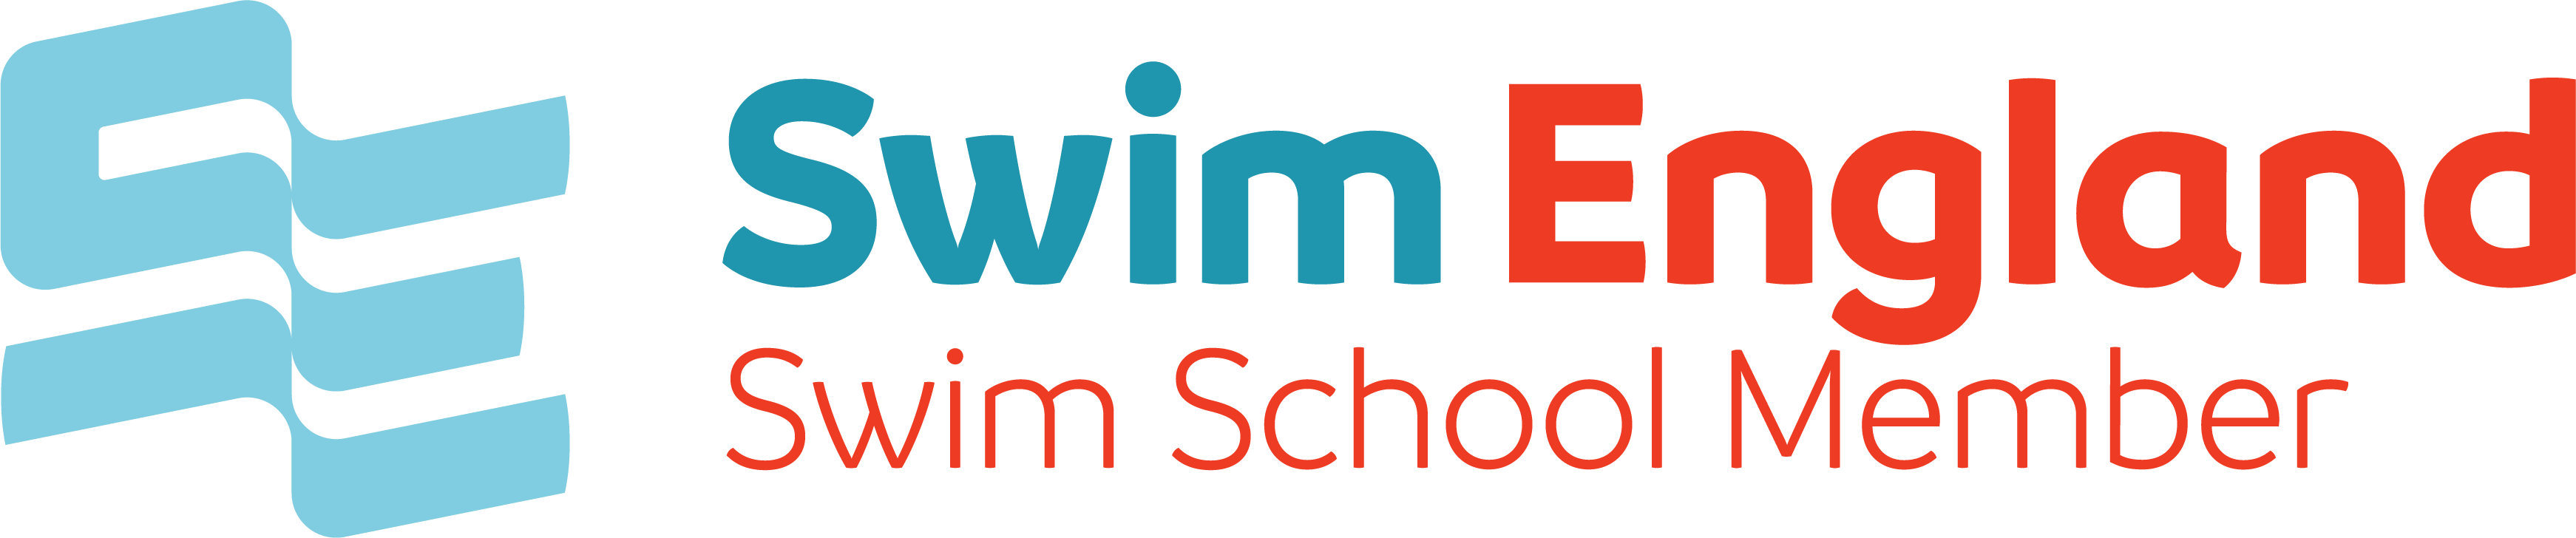 swim england swim school member logo